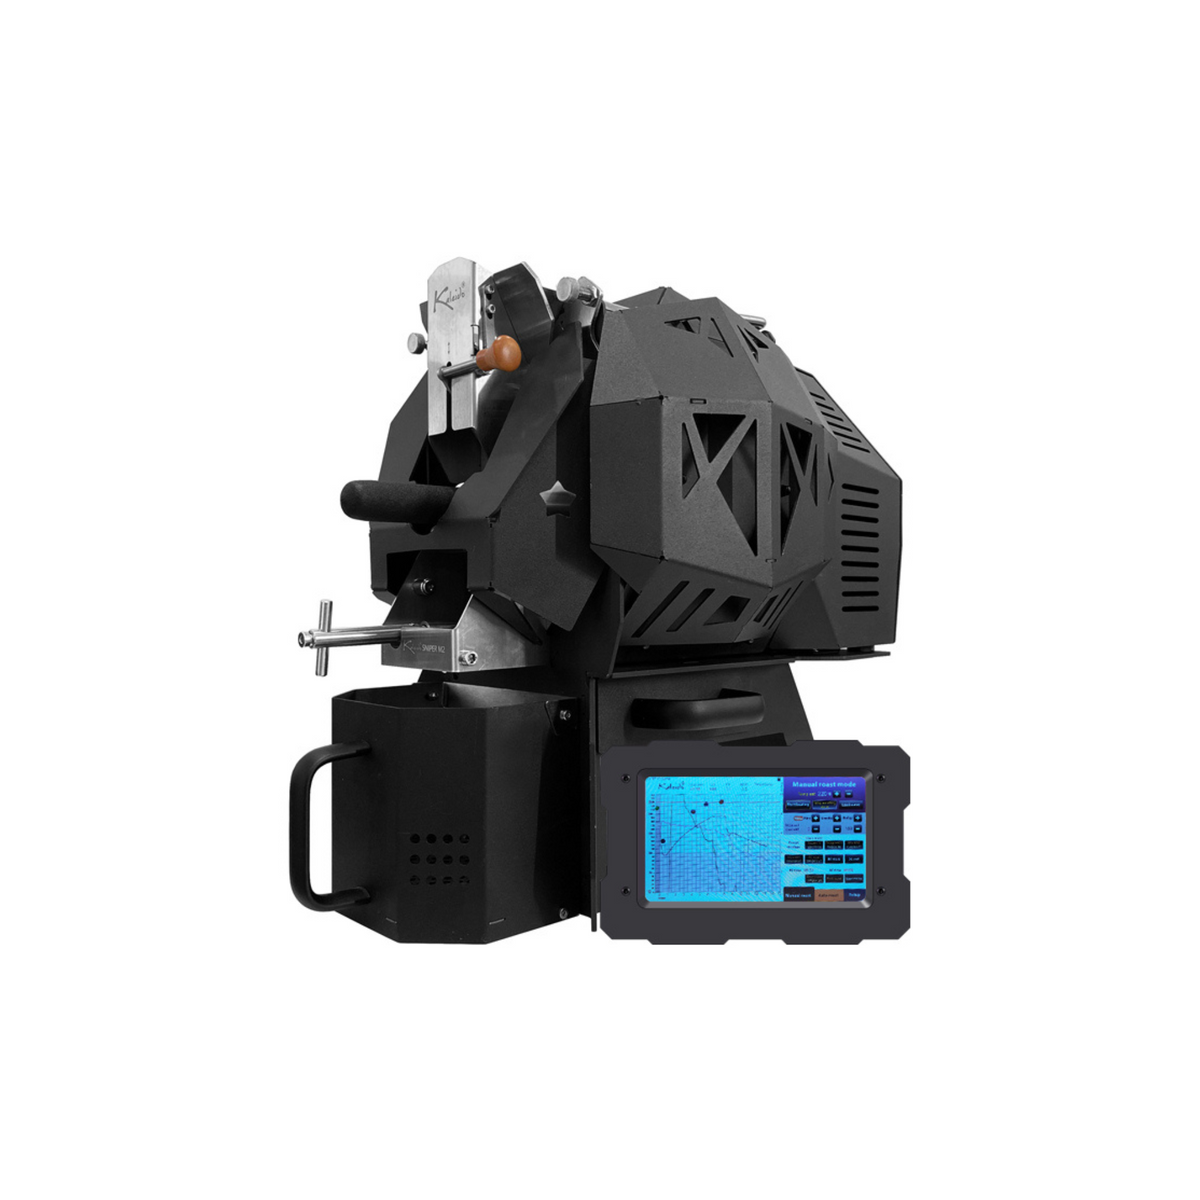 Kaleido Sniper M2 電動咖啡烘焙機（400克容量） - Kaleido System